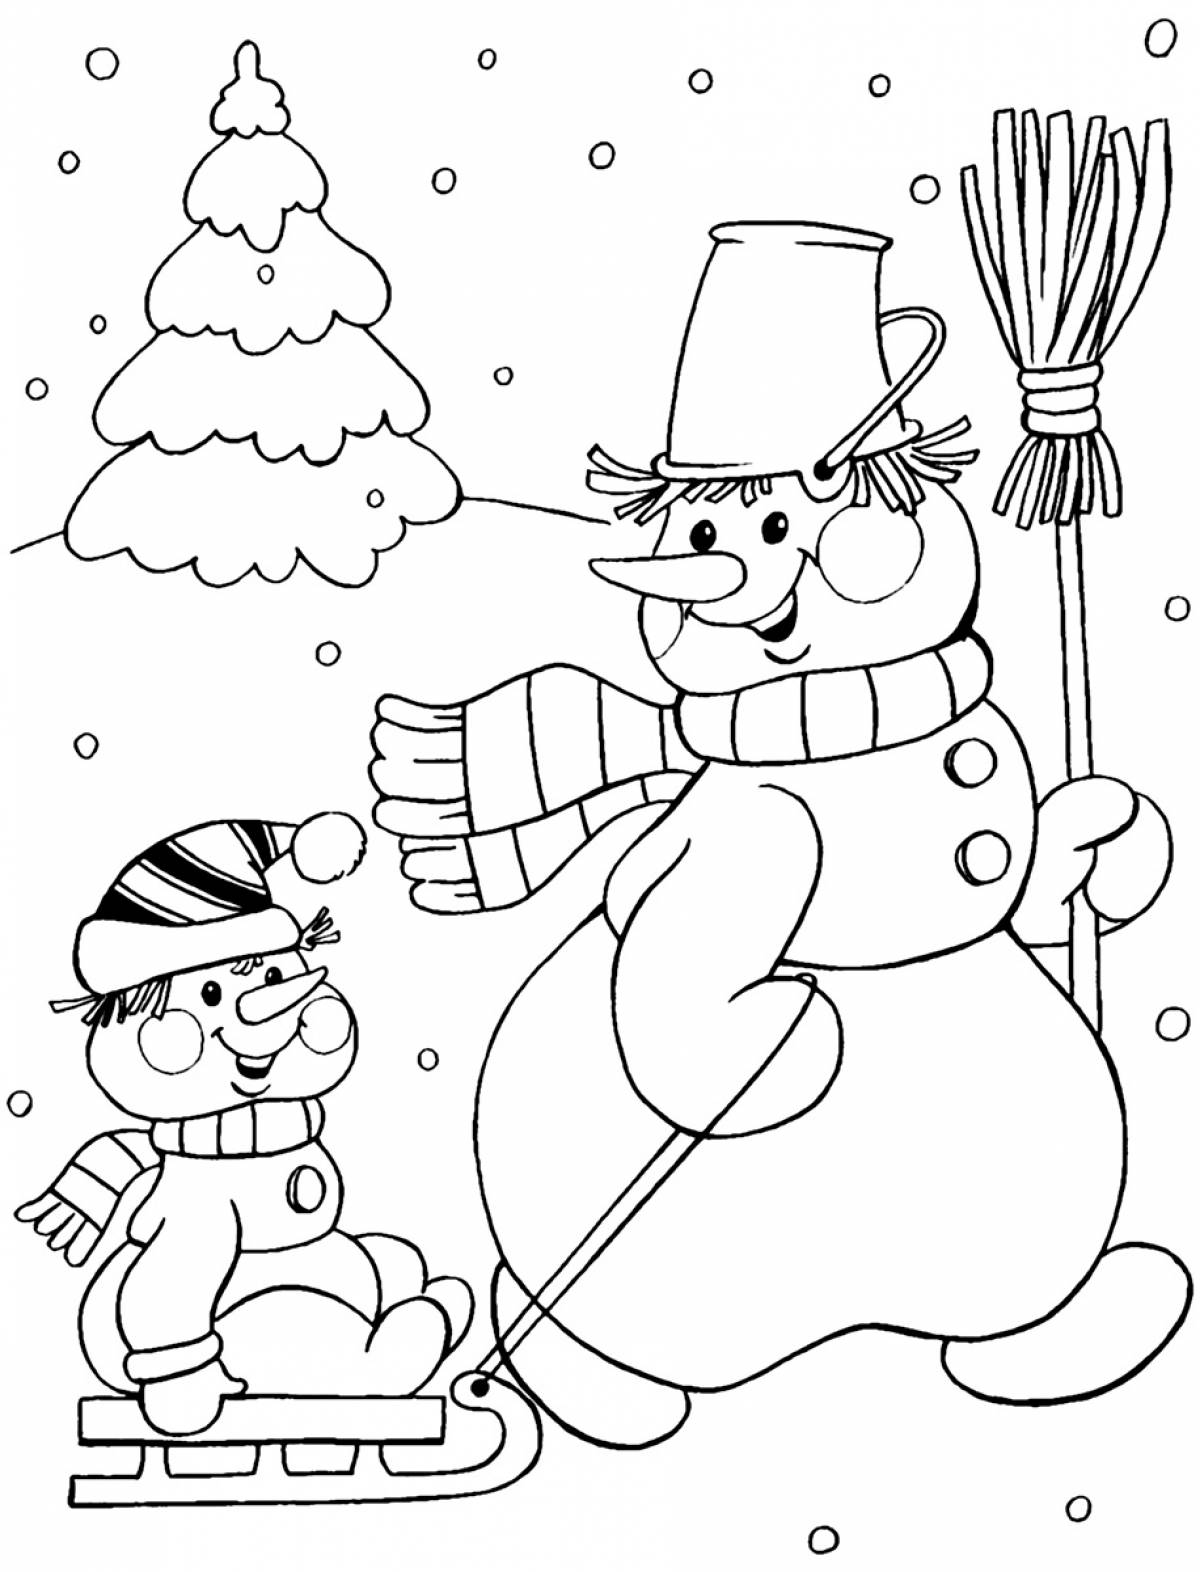 Sledding snowman #10